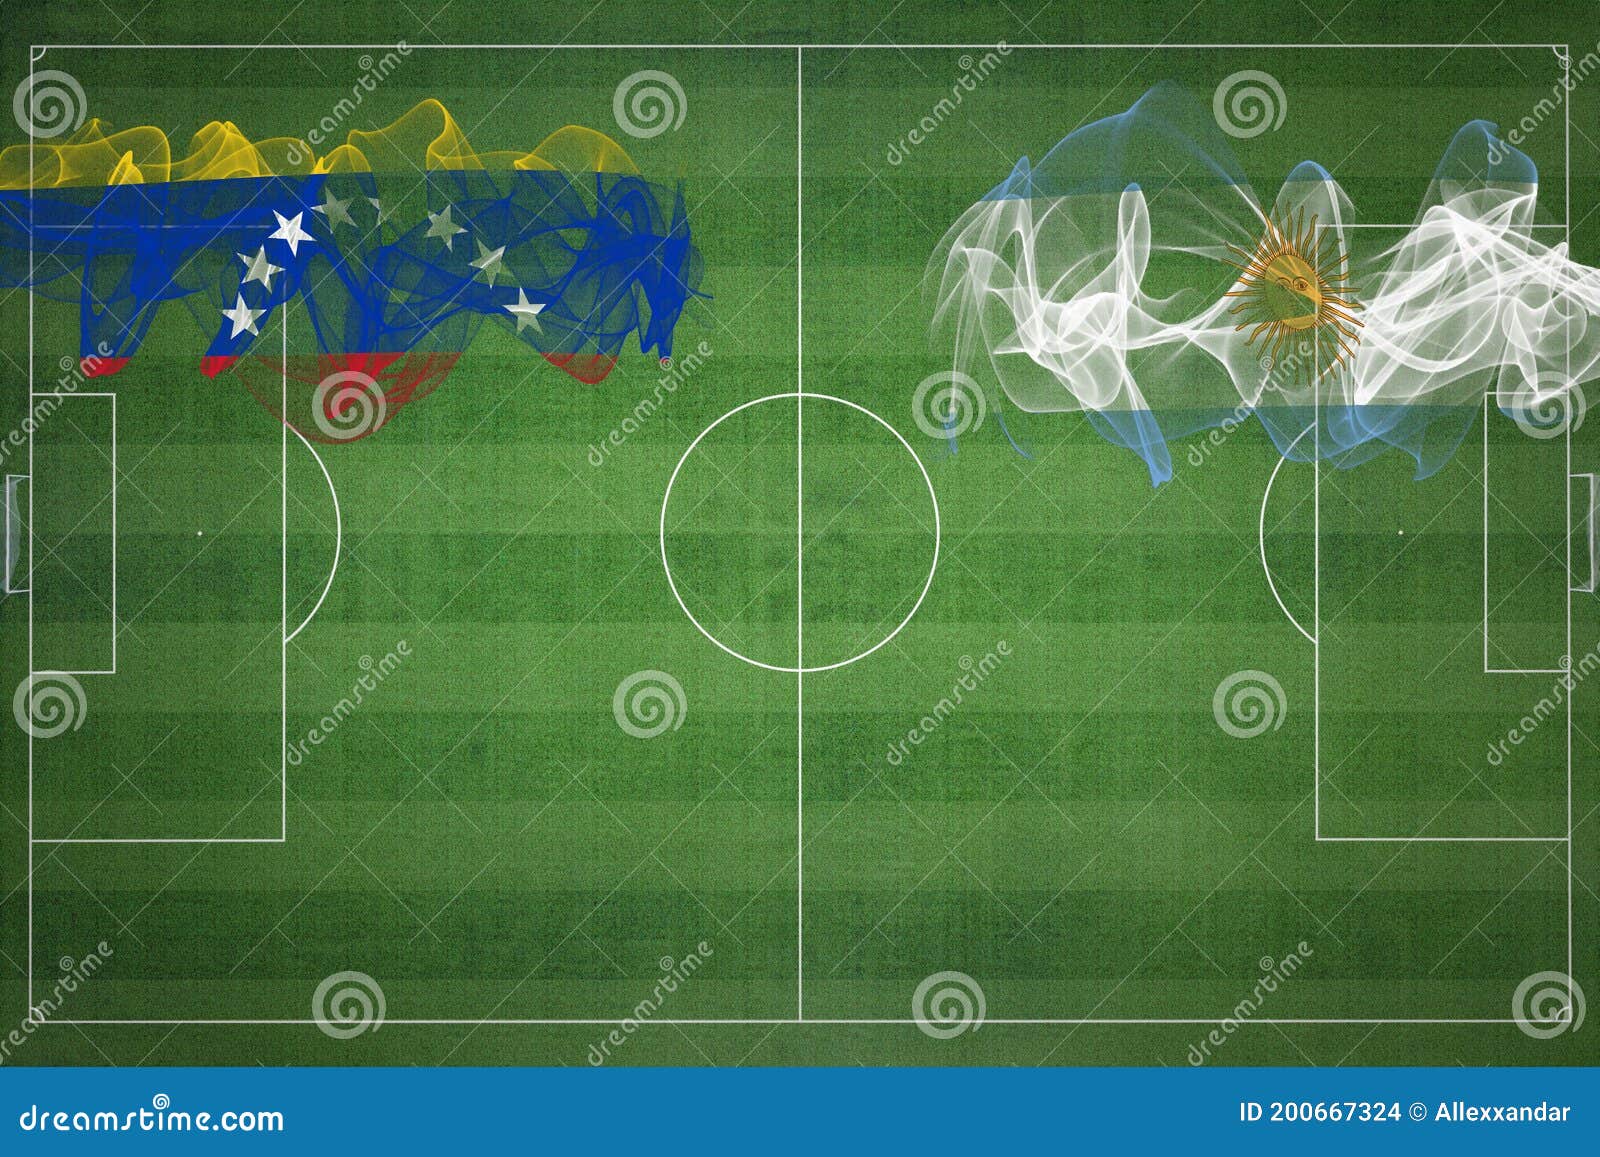 Venezuela Vs Argentina Soccer Match, National Colors, National Flags